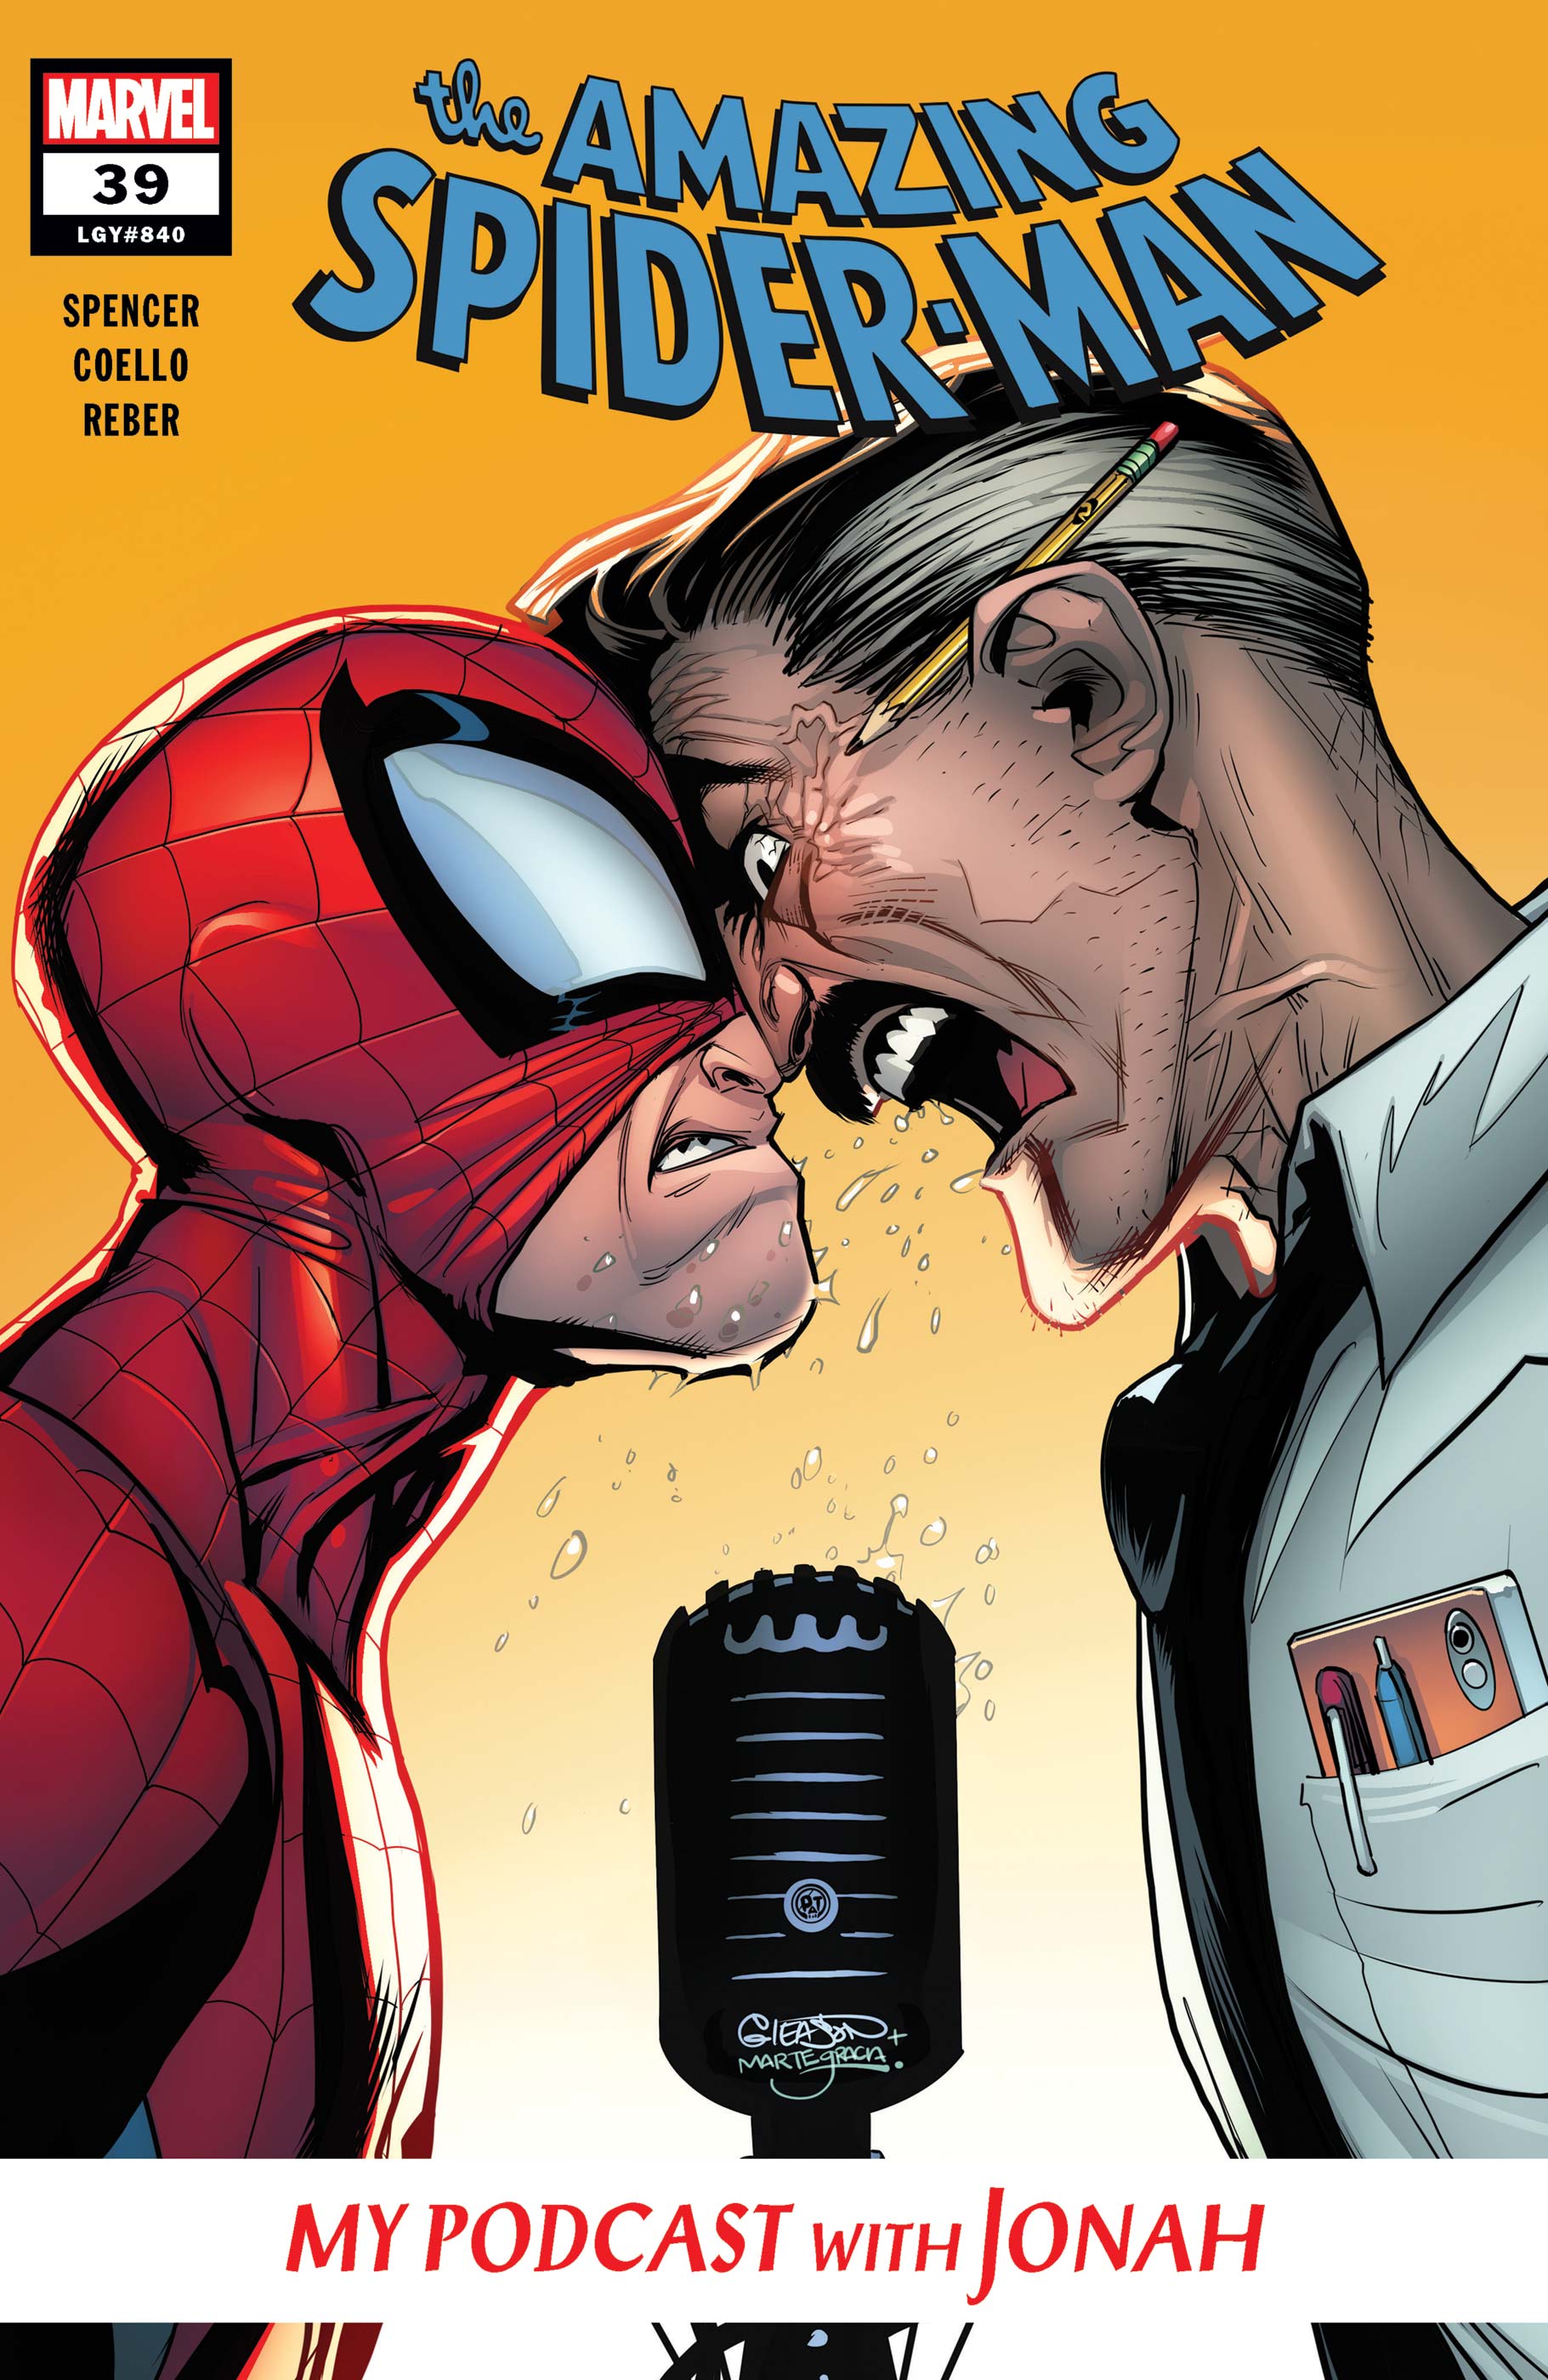 The Amazing Spider-Man (2018) #39